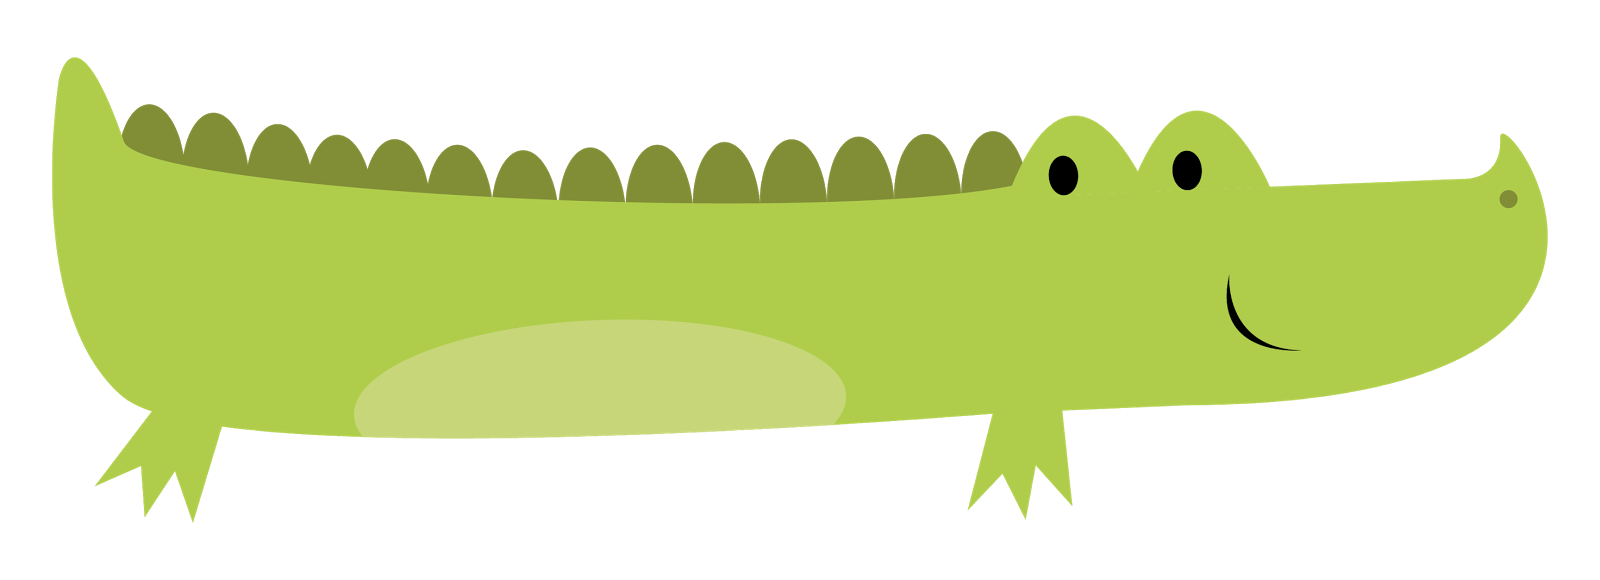 clipart alligator peter pan crocodile